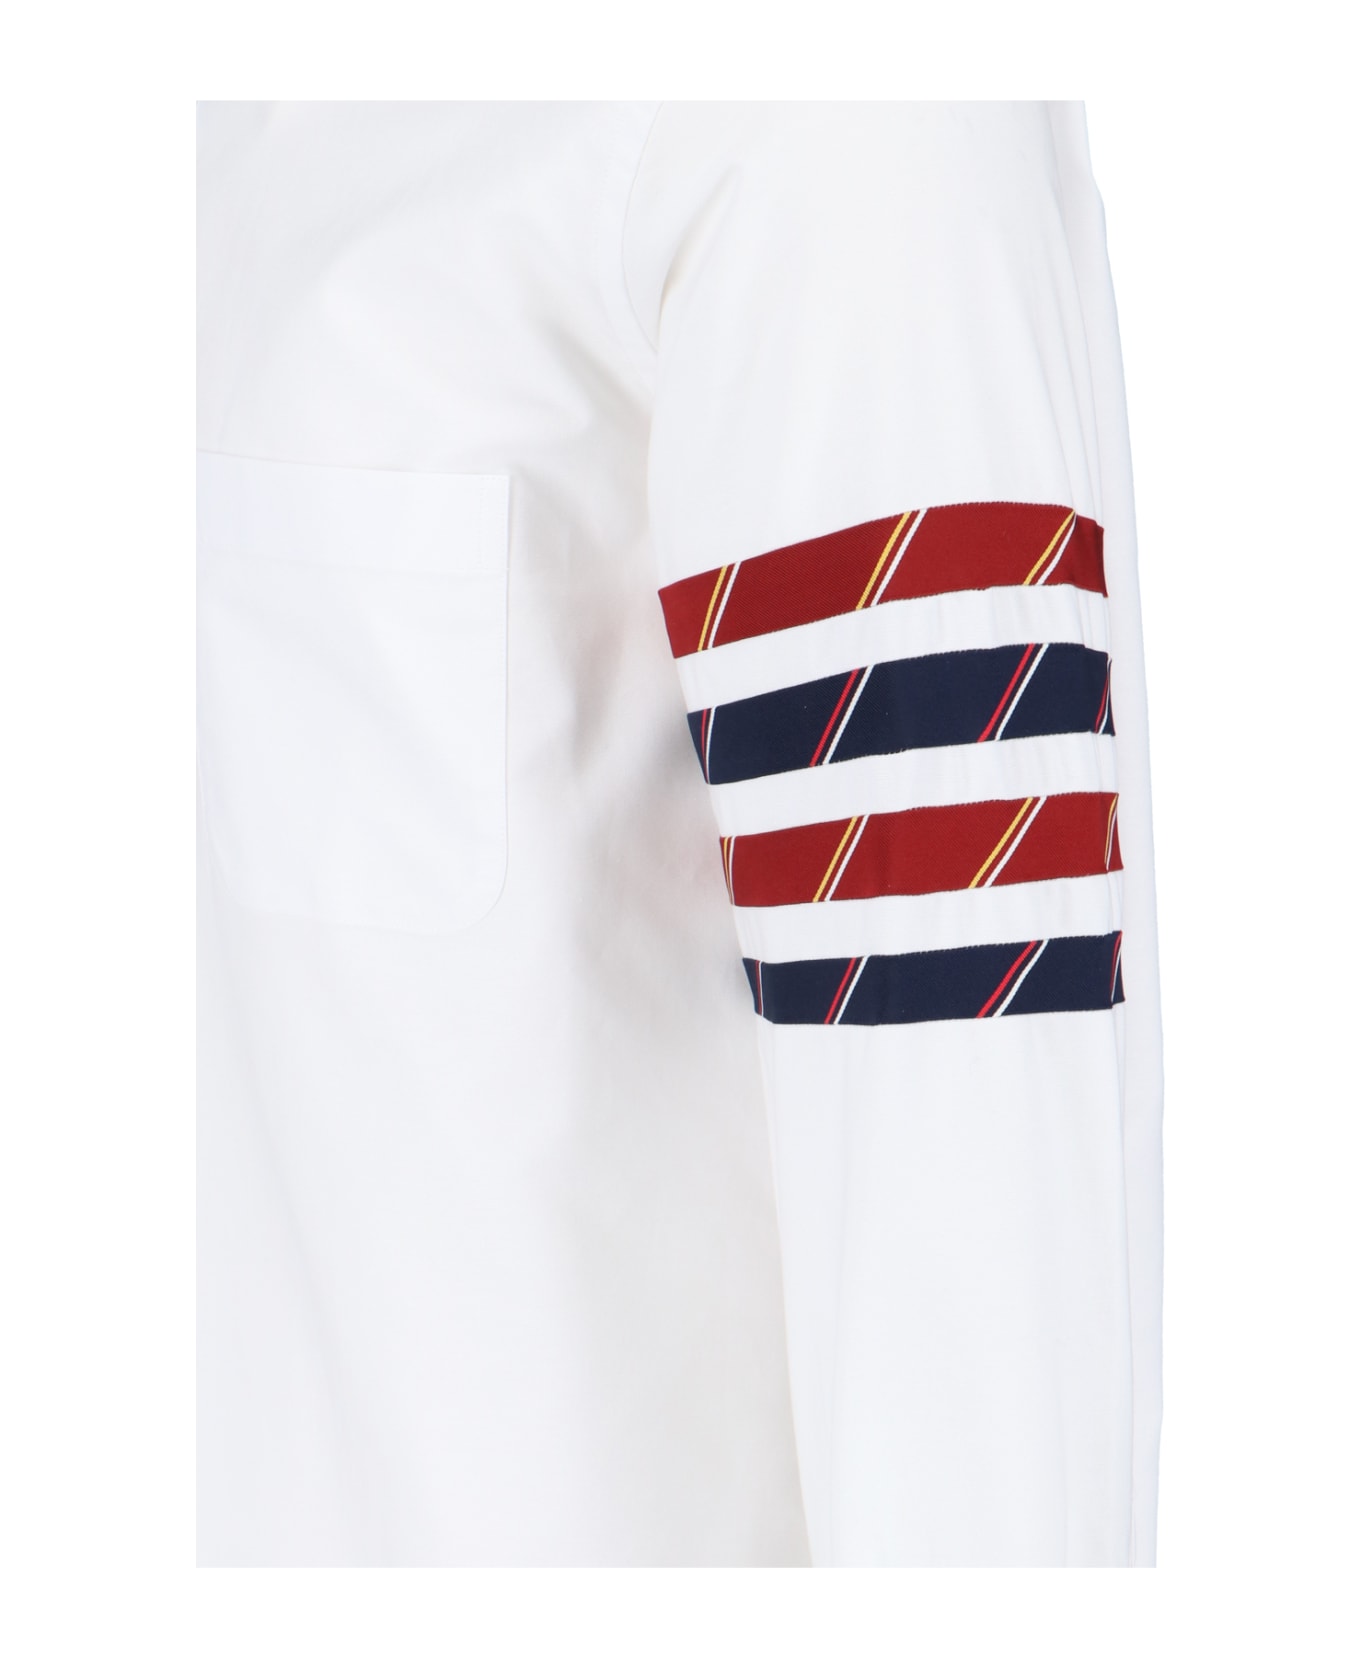 Thom Browne '4-bar' Shirt - White シャツ